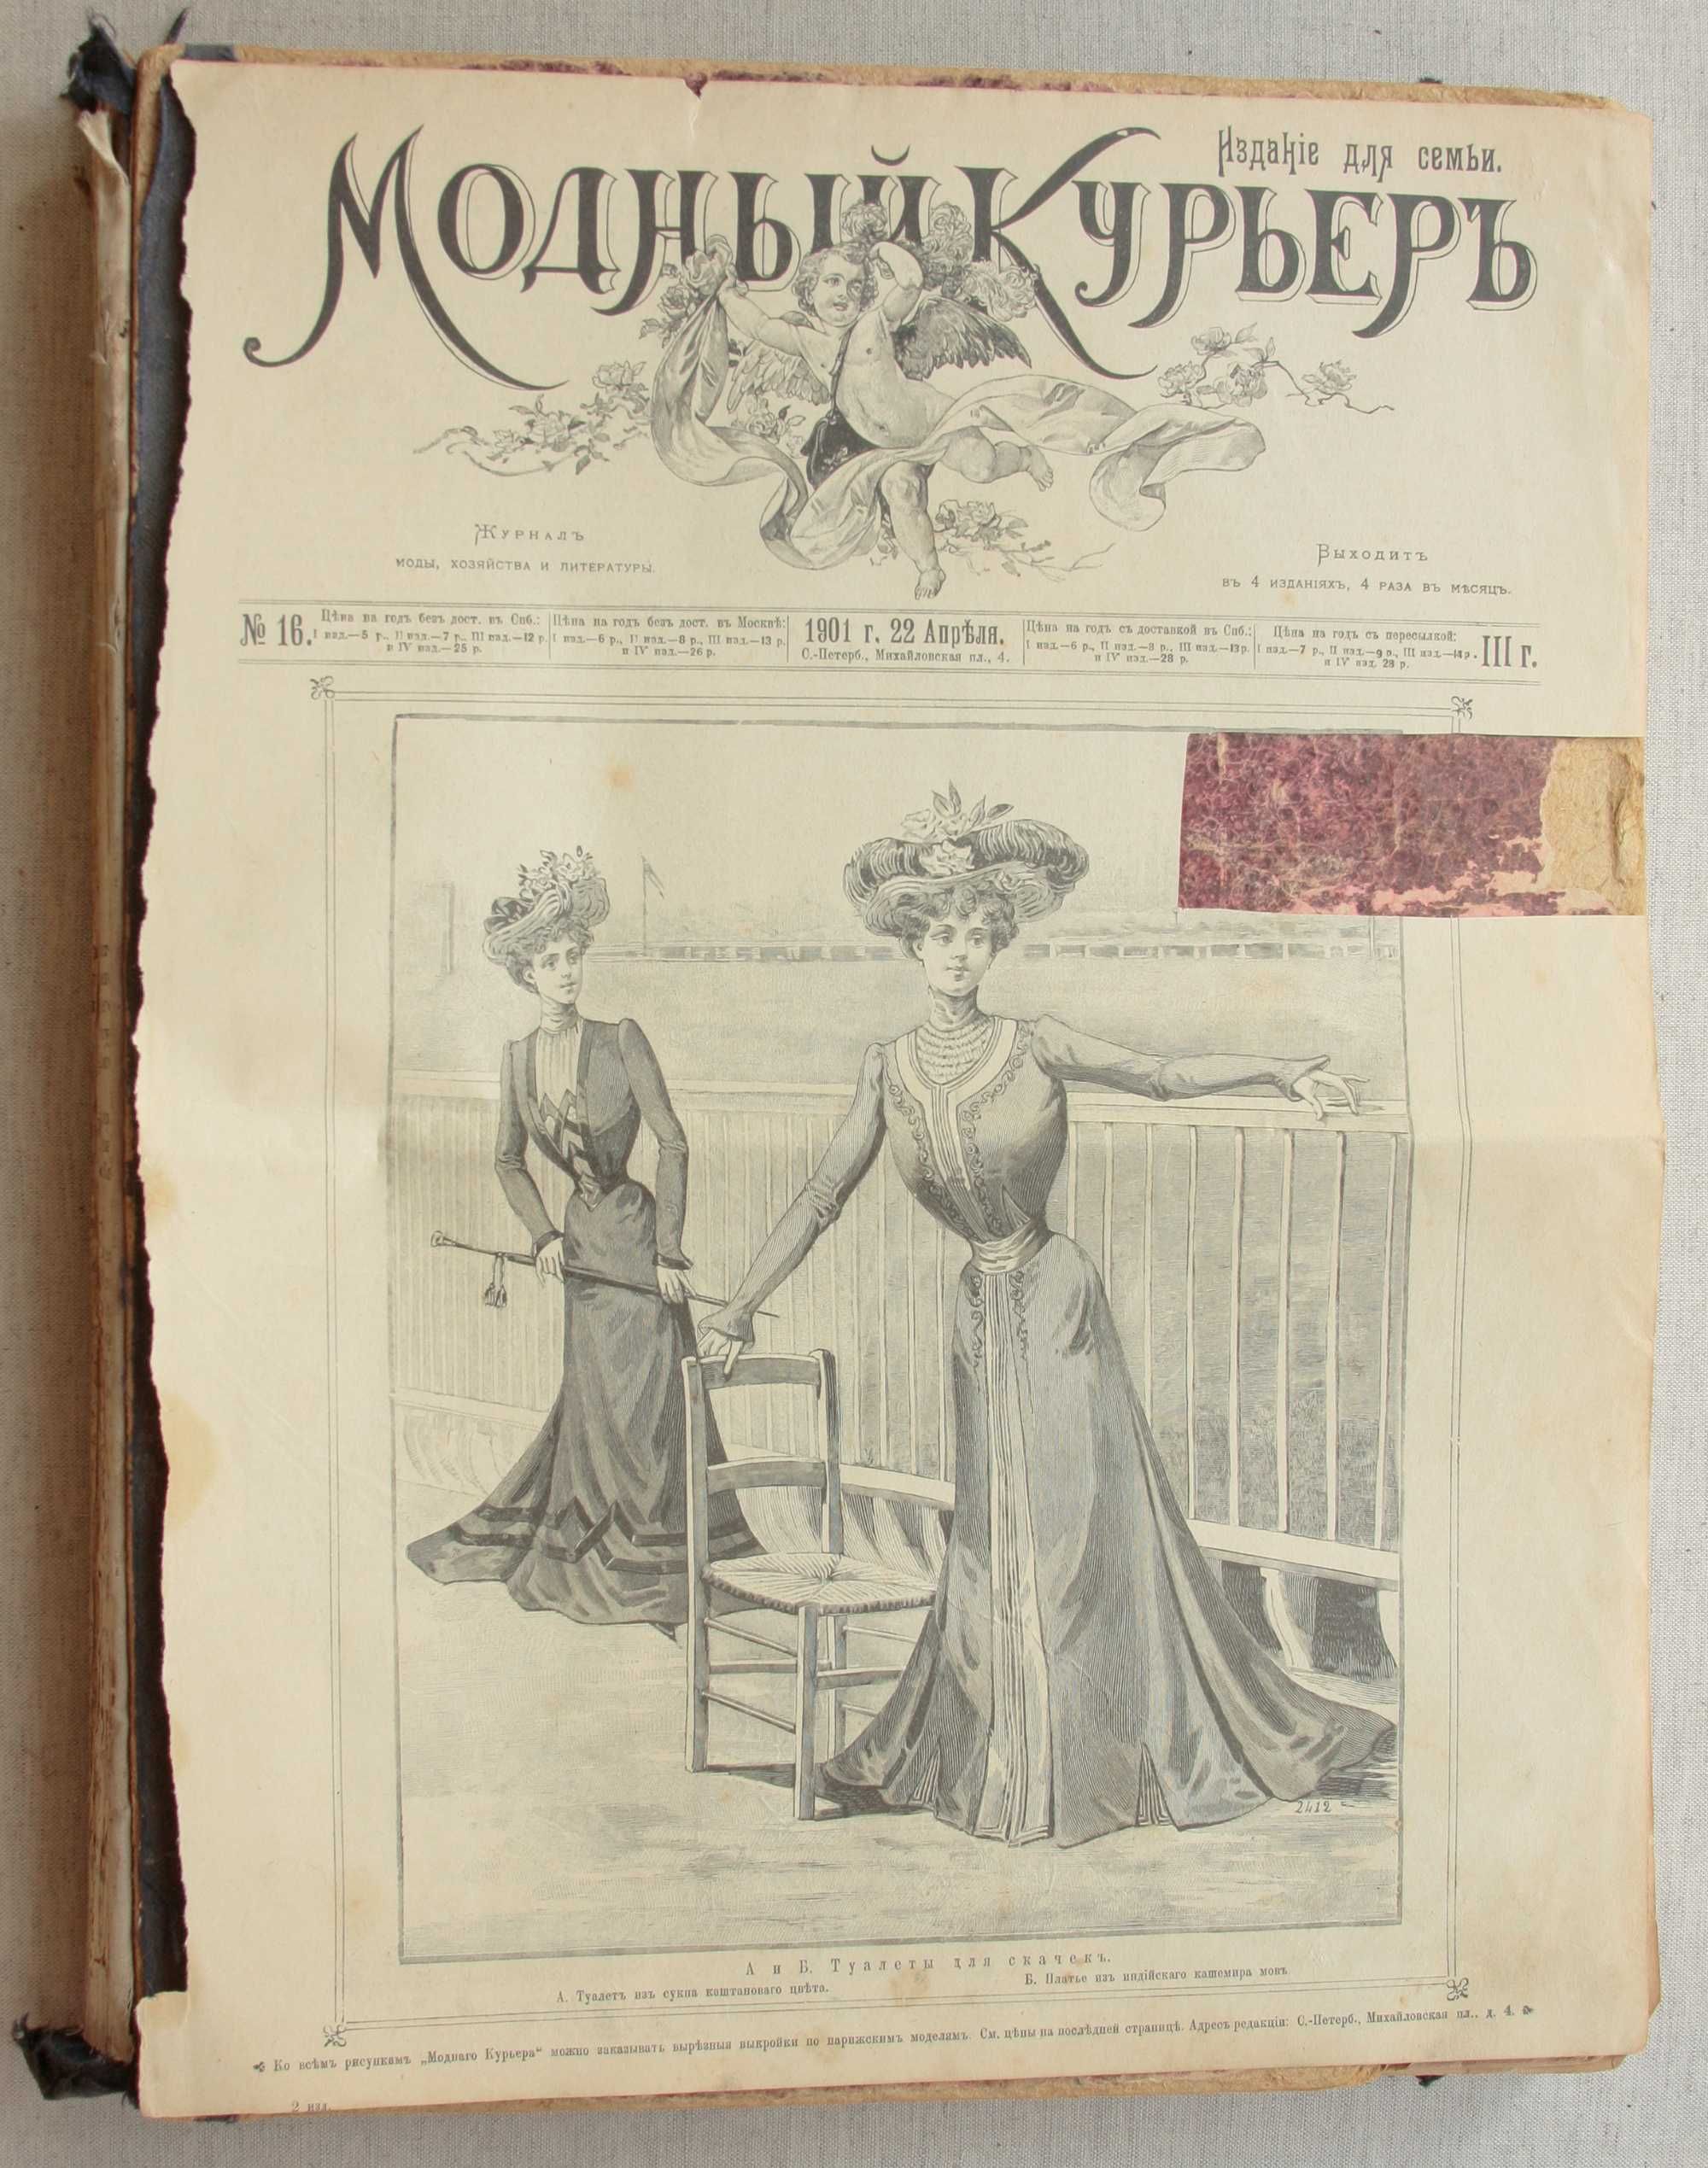 Журнал "Модный курьер" 1901 г., подшивка.